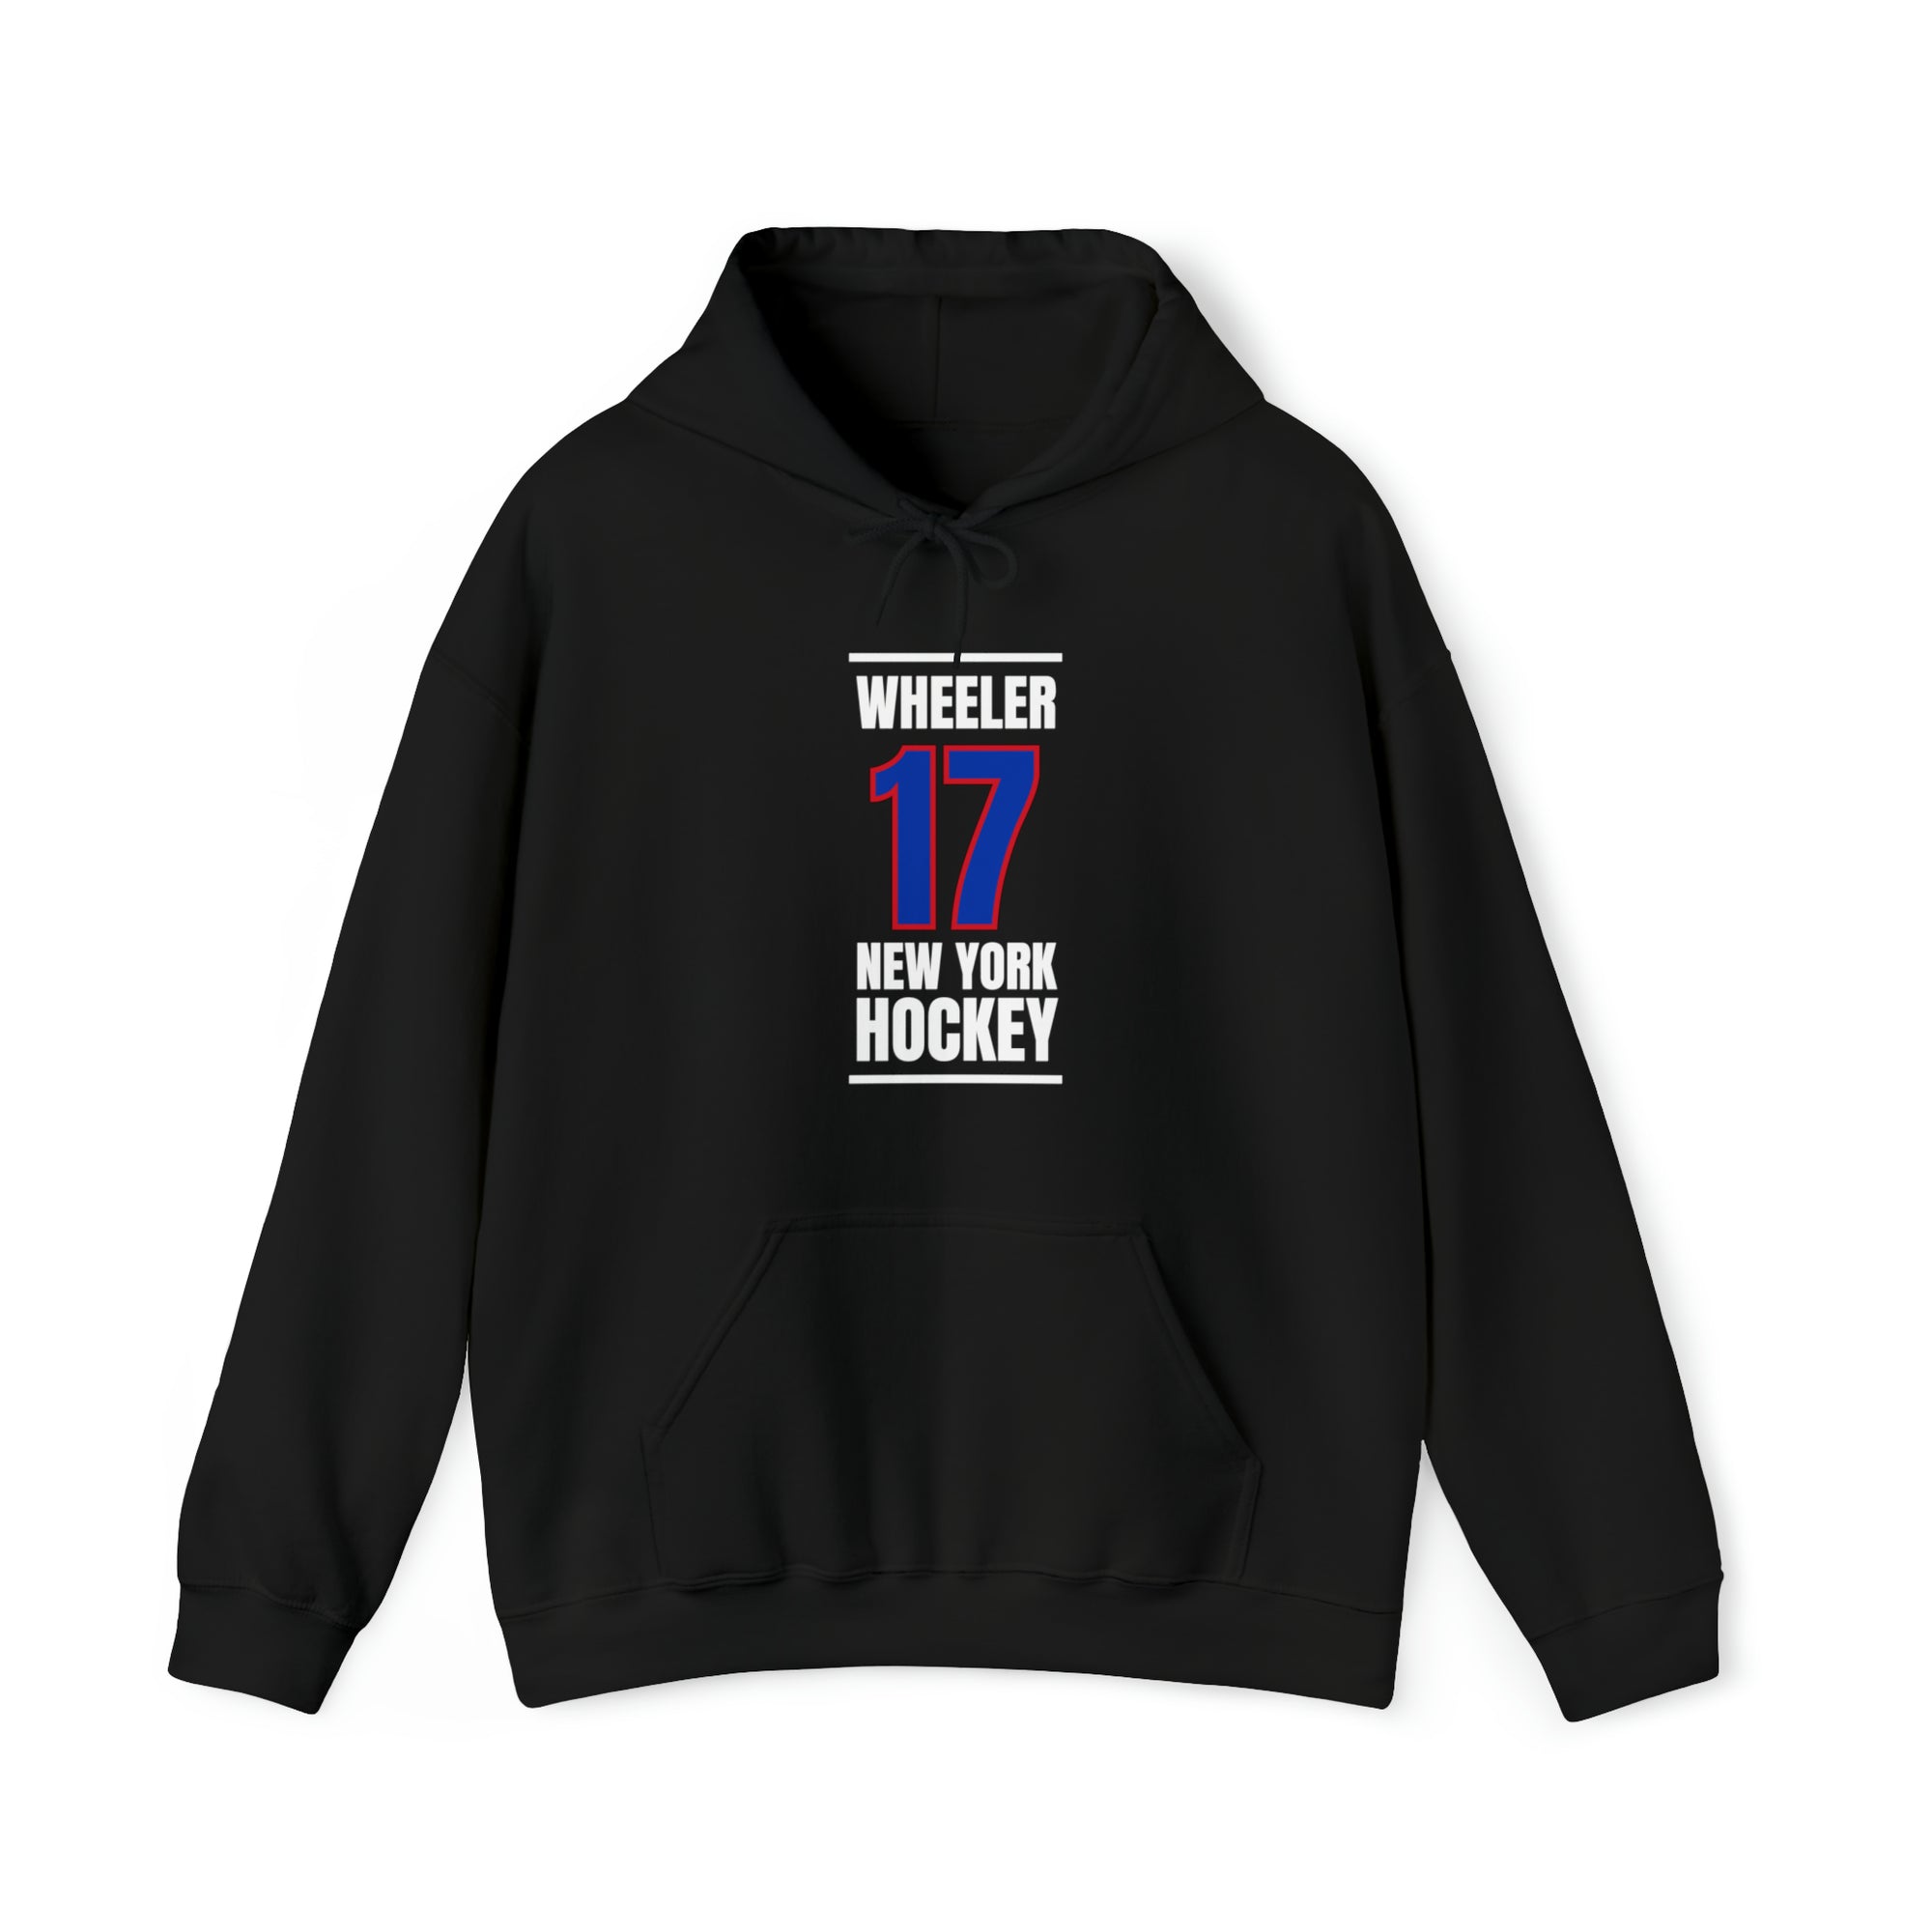 Wheeler 17 New York Hockey Royal Blue Vertical Design Unisex Hooded Sweatshirt